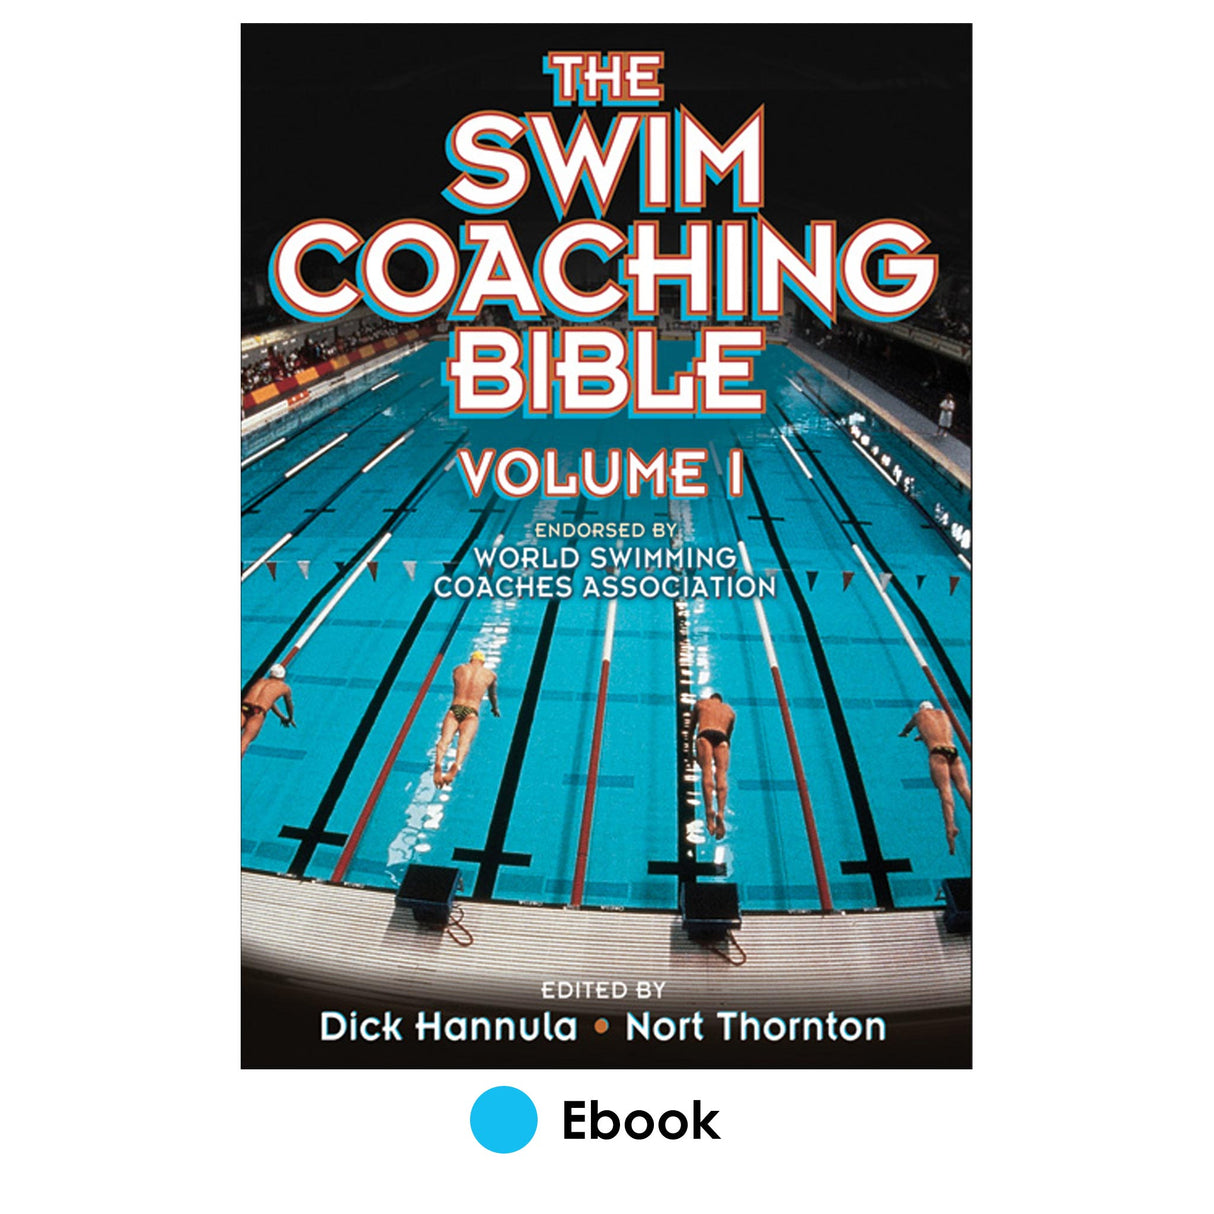 Swim Coaching Bible Volume I PDF, The